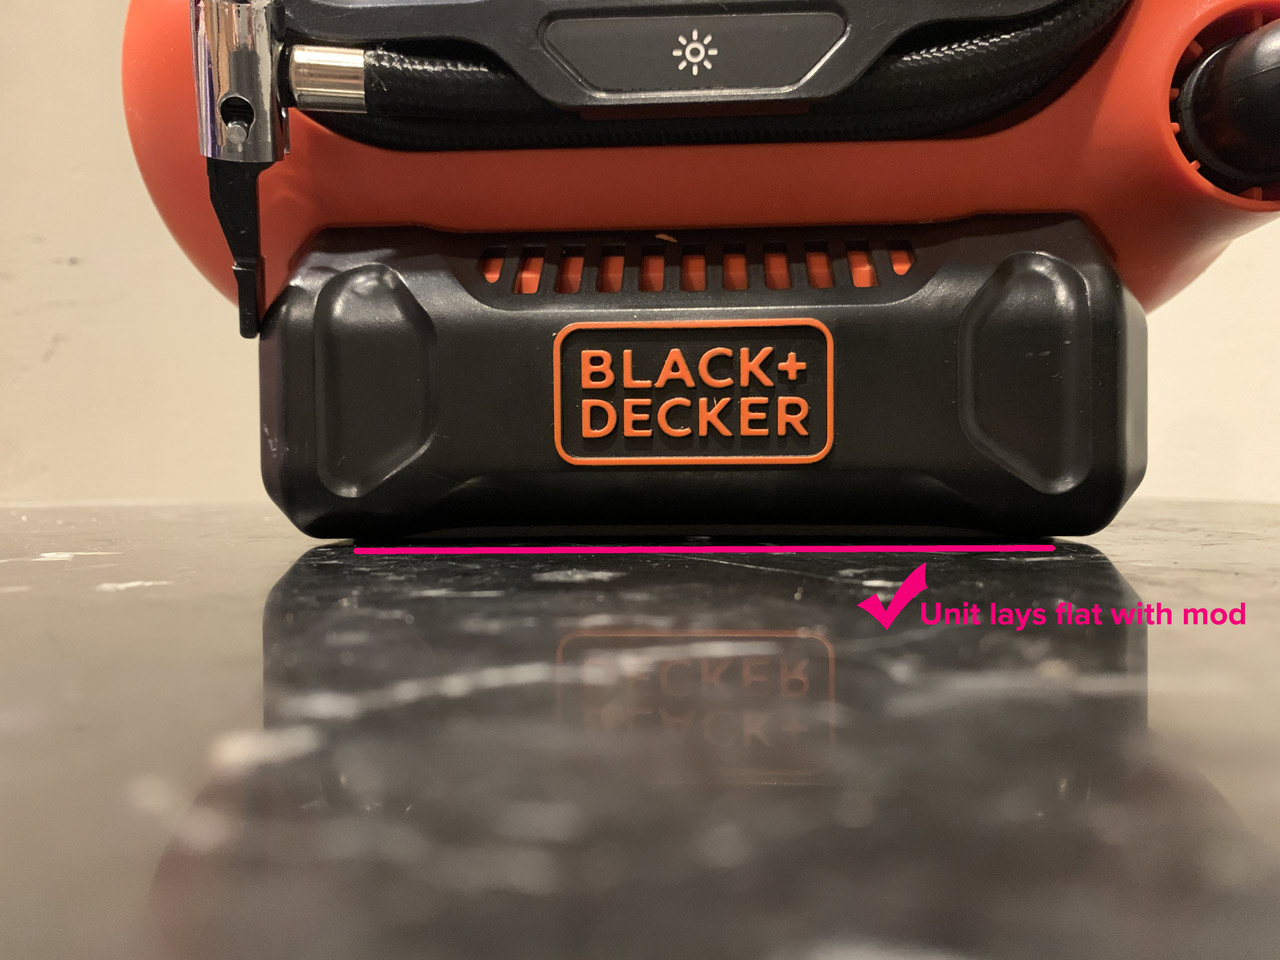 Black & Decker 20V MAX Multi-Purpose Inflator laying flat thanks to custom power cord notch